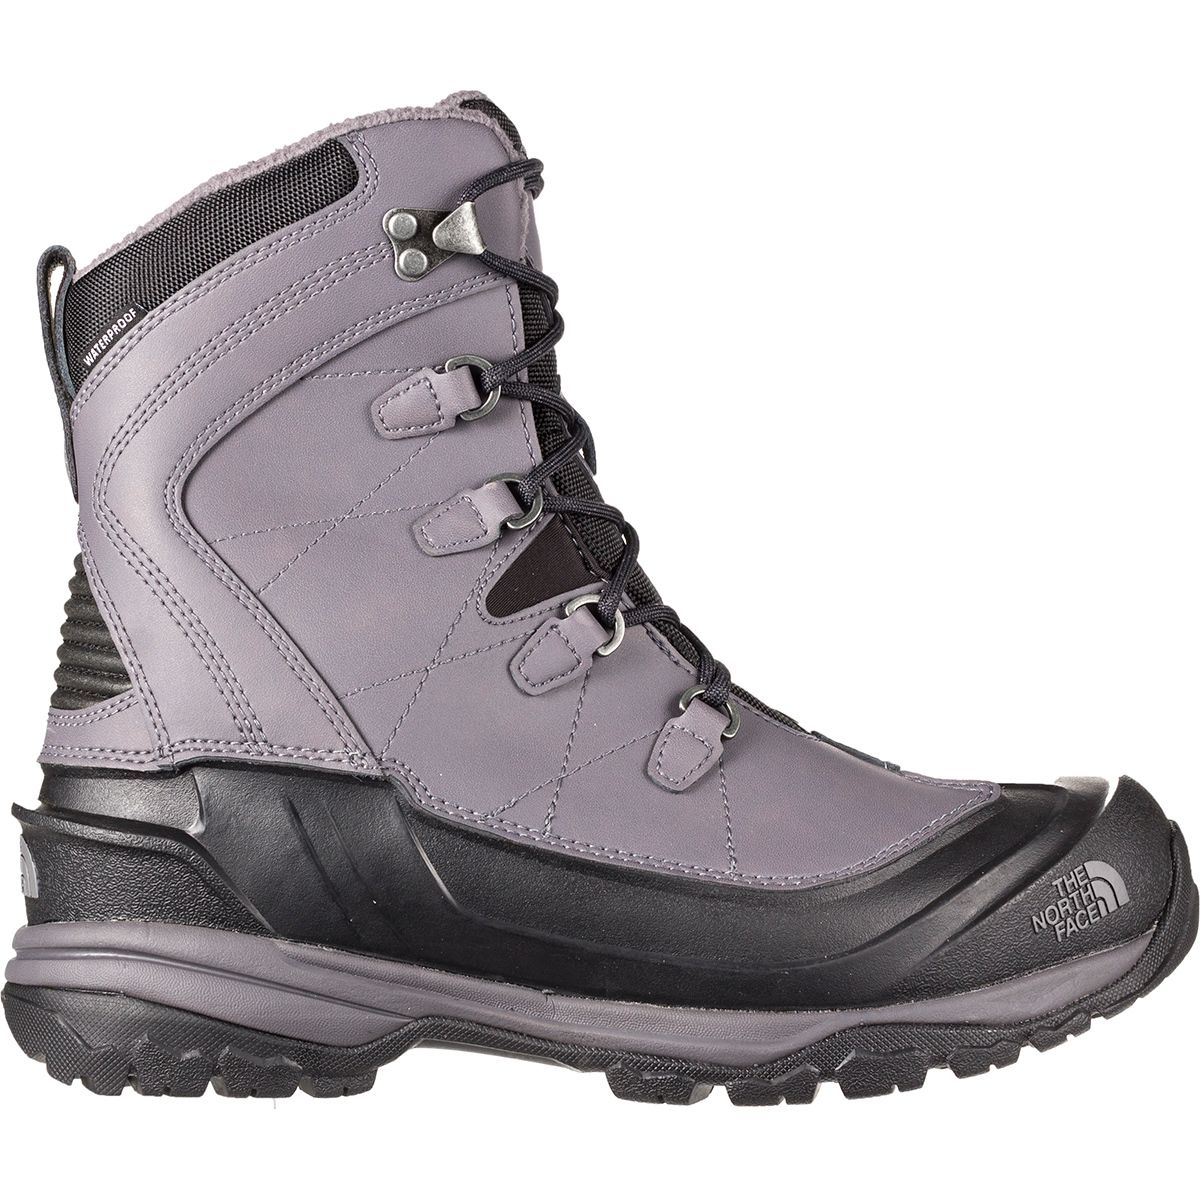 The North Face Chilkat Evo Boot - Men's 